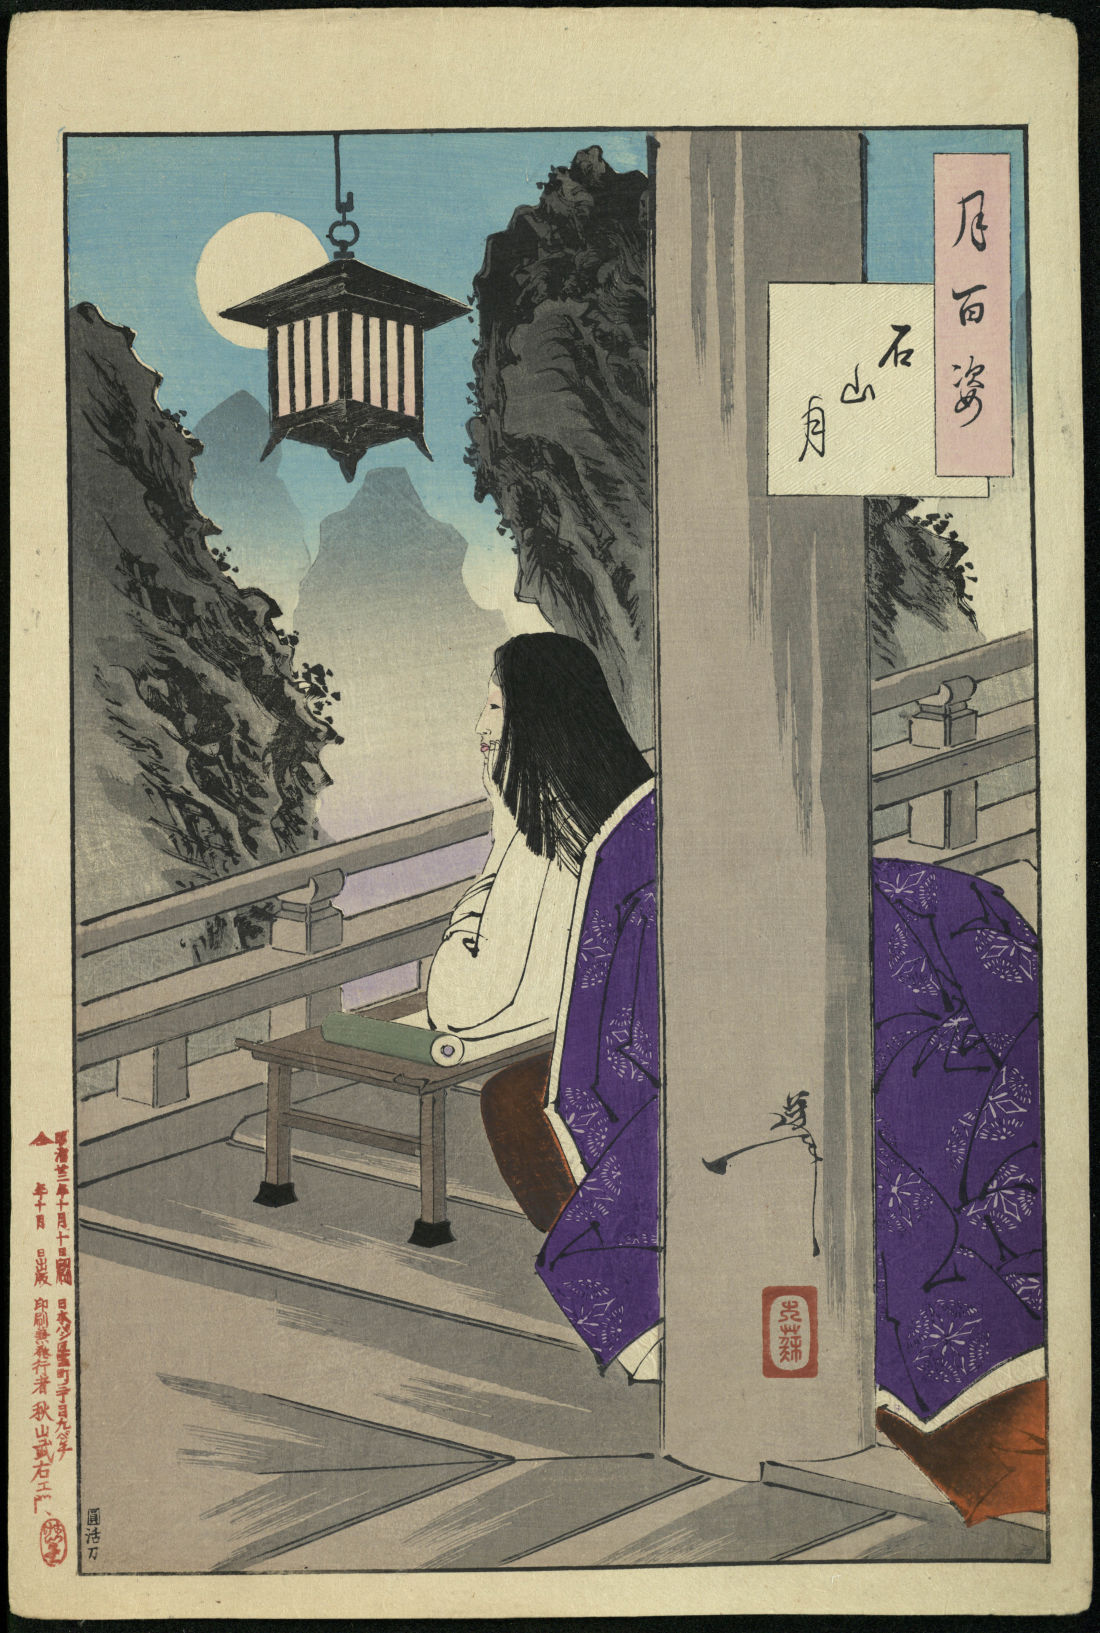 Murasaki Shikibu depicted in a purple robe, staring at the moon in Ishimyama Temple